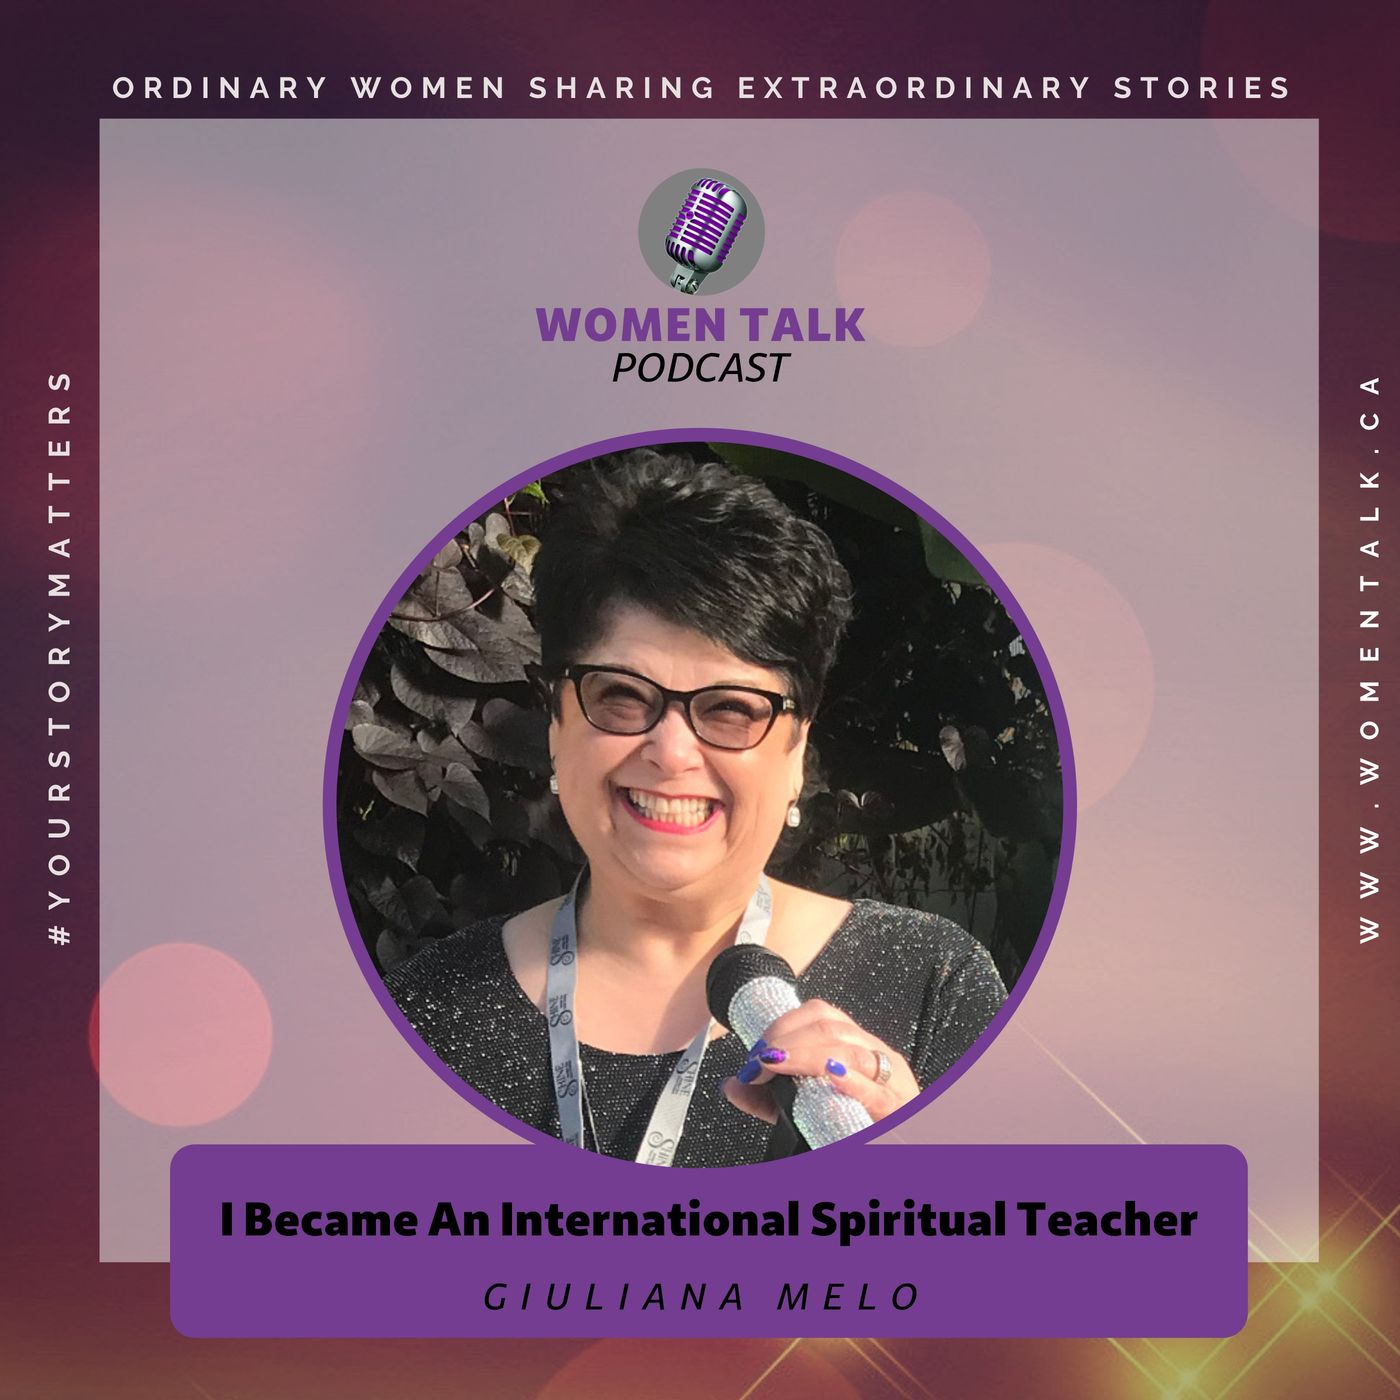 I Became An International Spiritual Teacher ~ Giuliana Melo